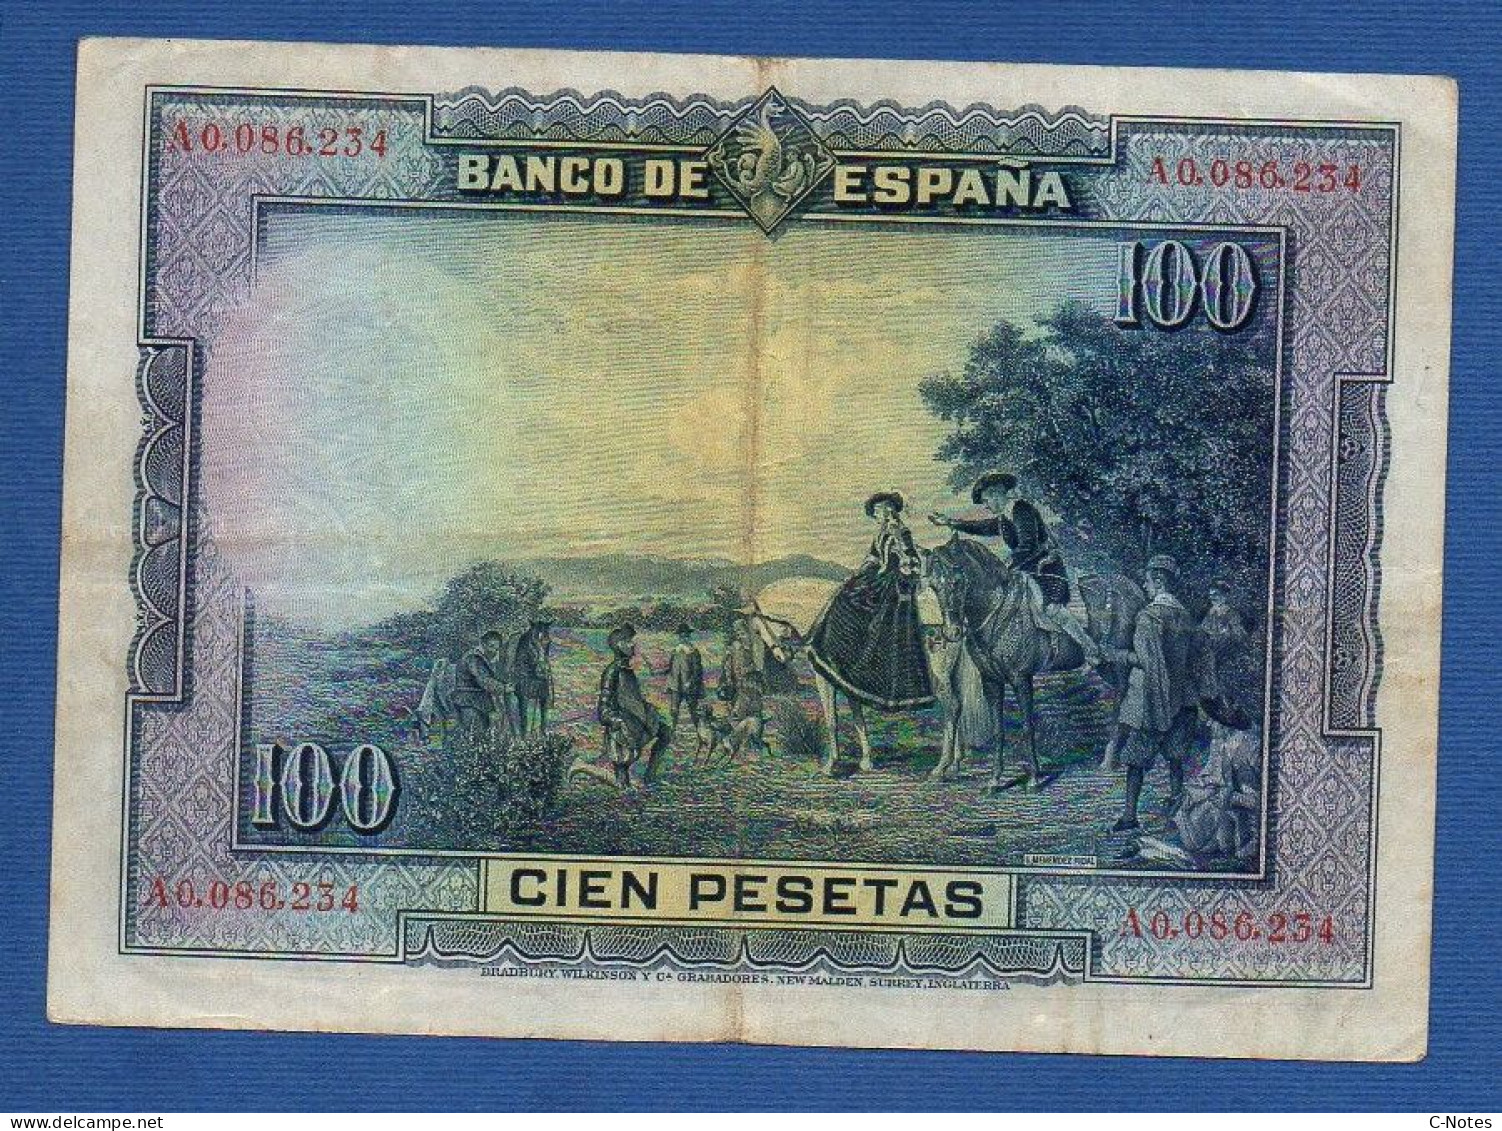 SPAIN - P. 76a – 100 Pesetas 1928 VF, S/n A0,086,234 - 100 Peseten